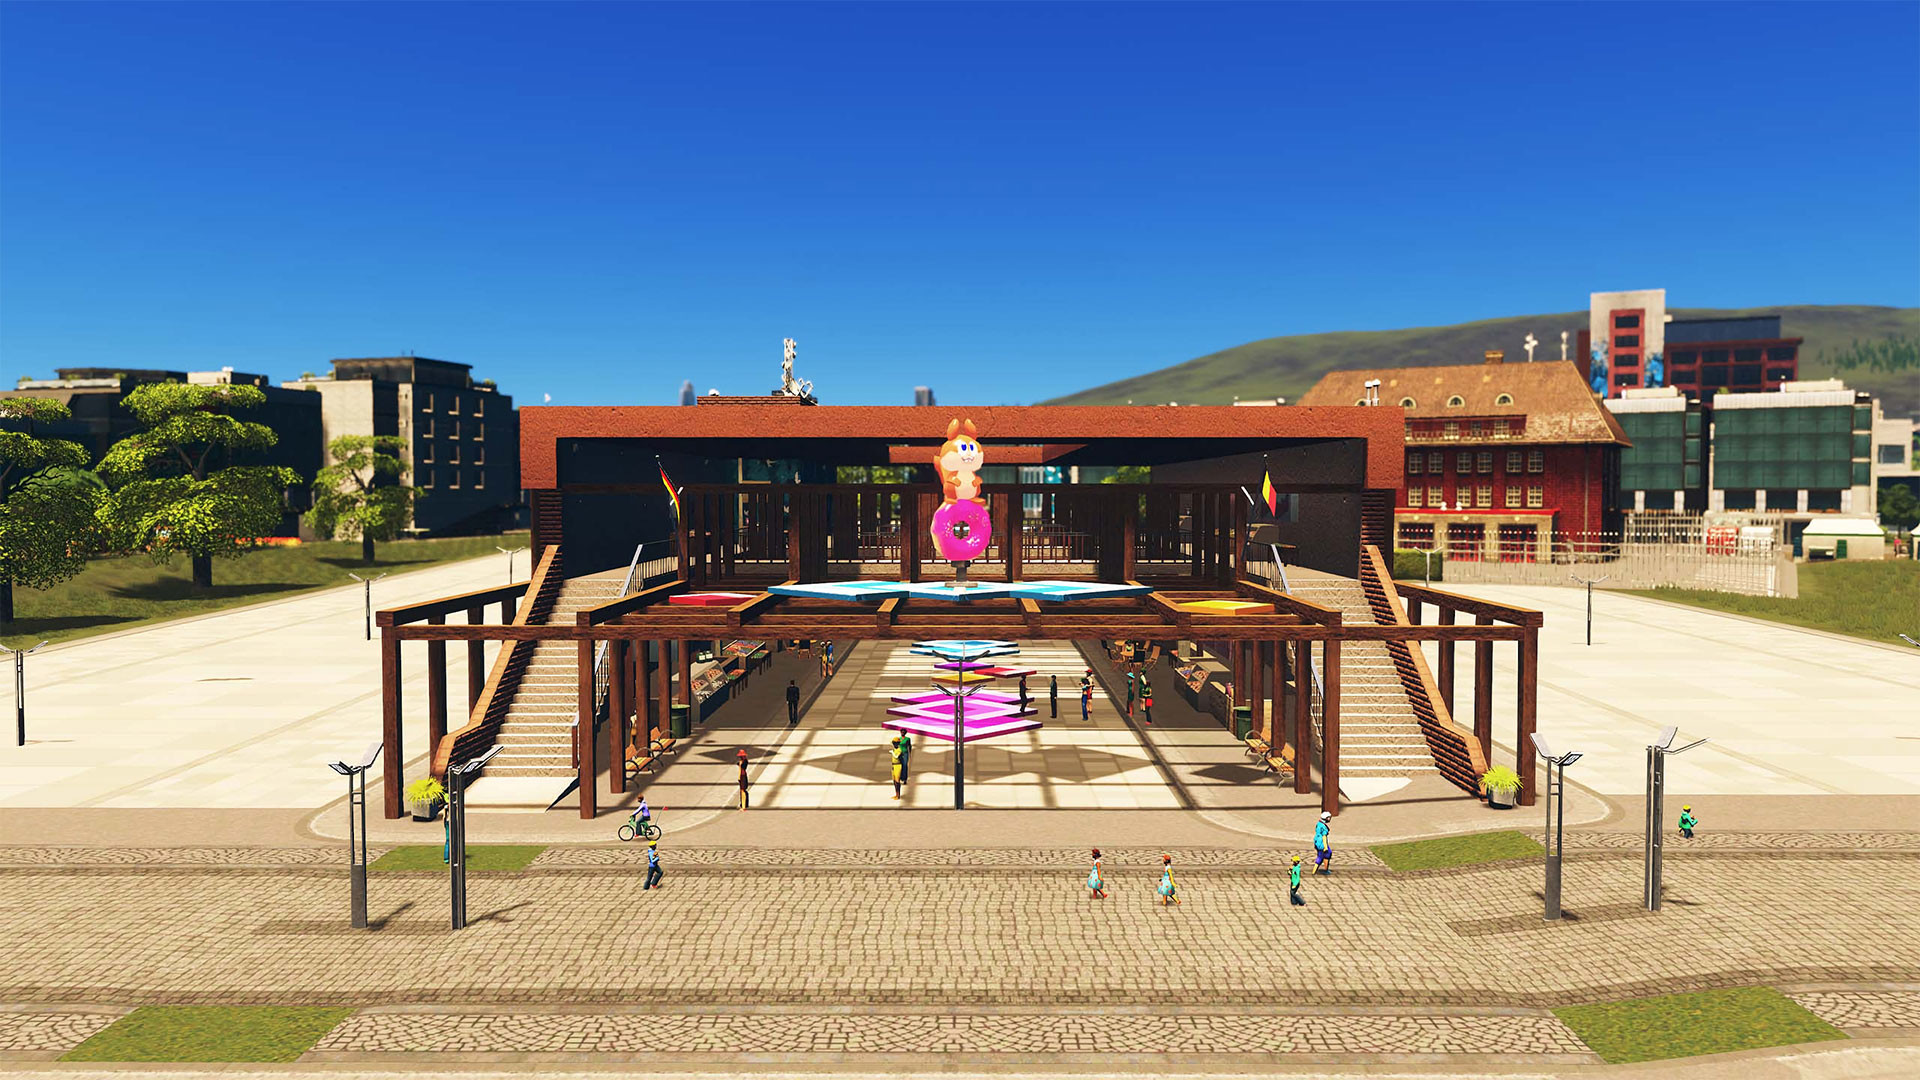 Cities: Skylines - Plazas & Promenades DLC EN Language Only Steam CD Key